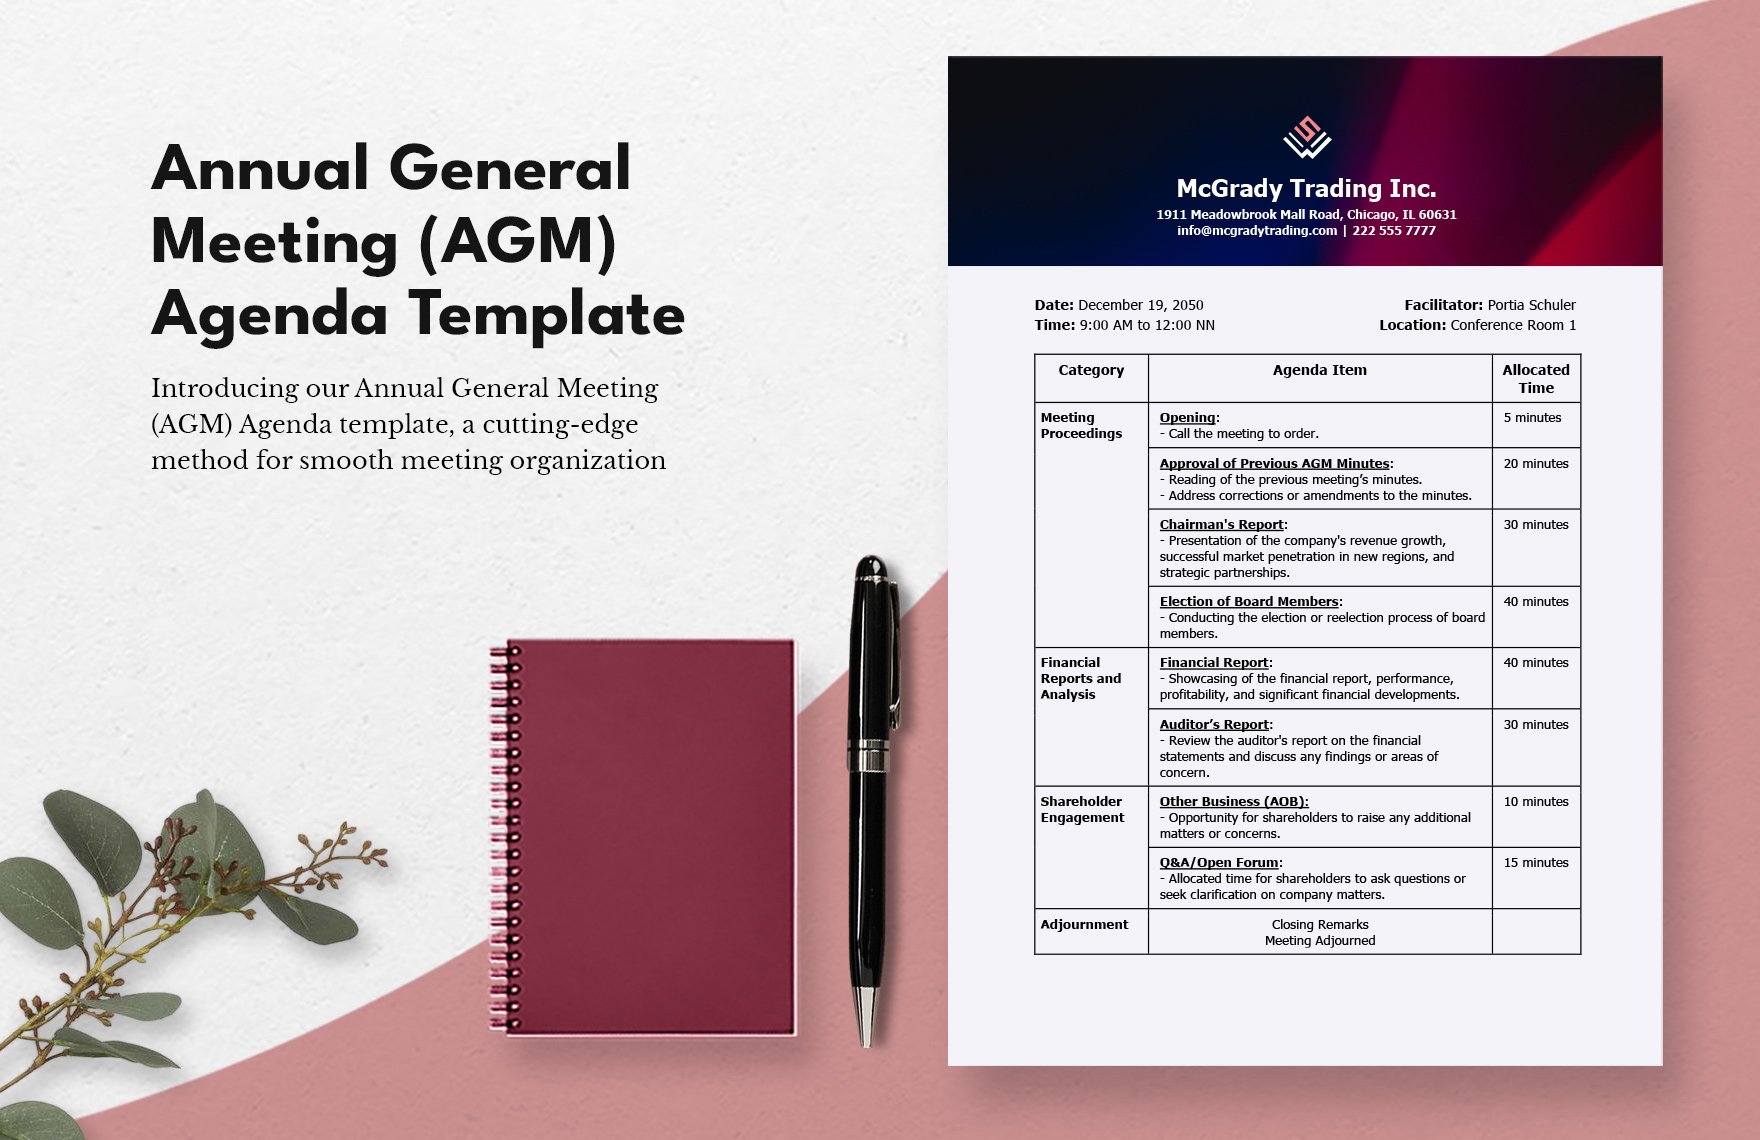 Annual General Meeting (AGM) Agenda Template